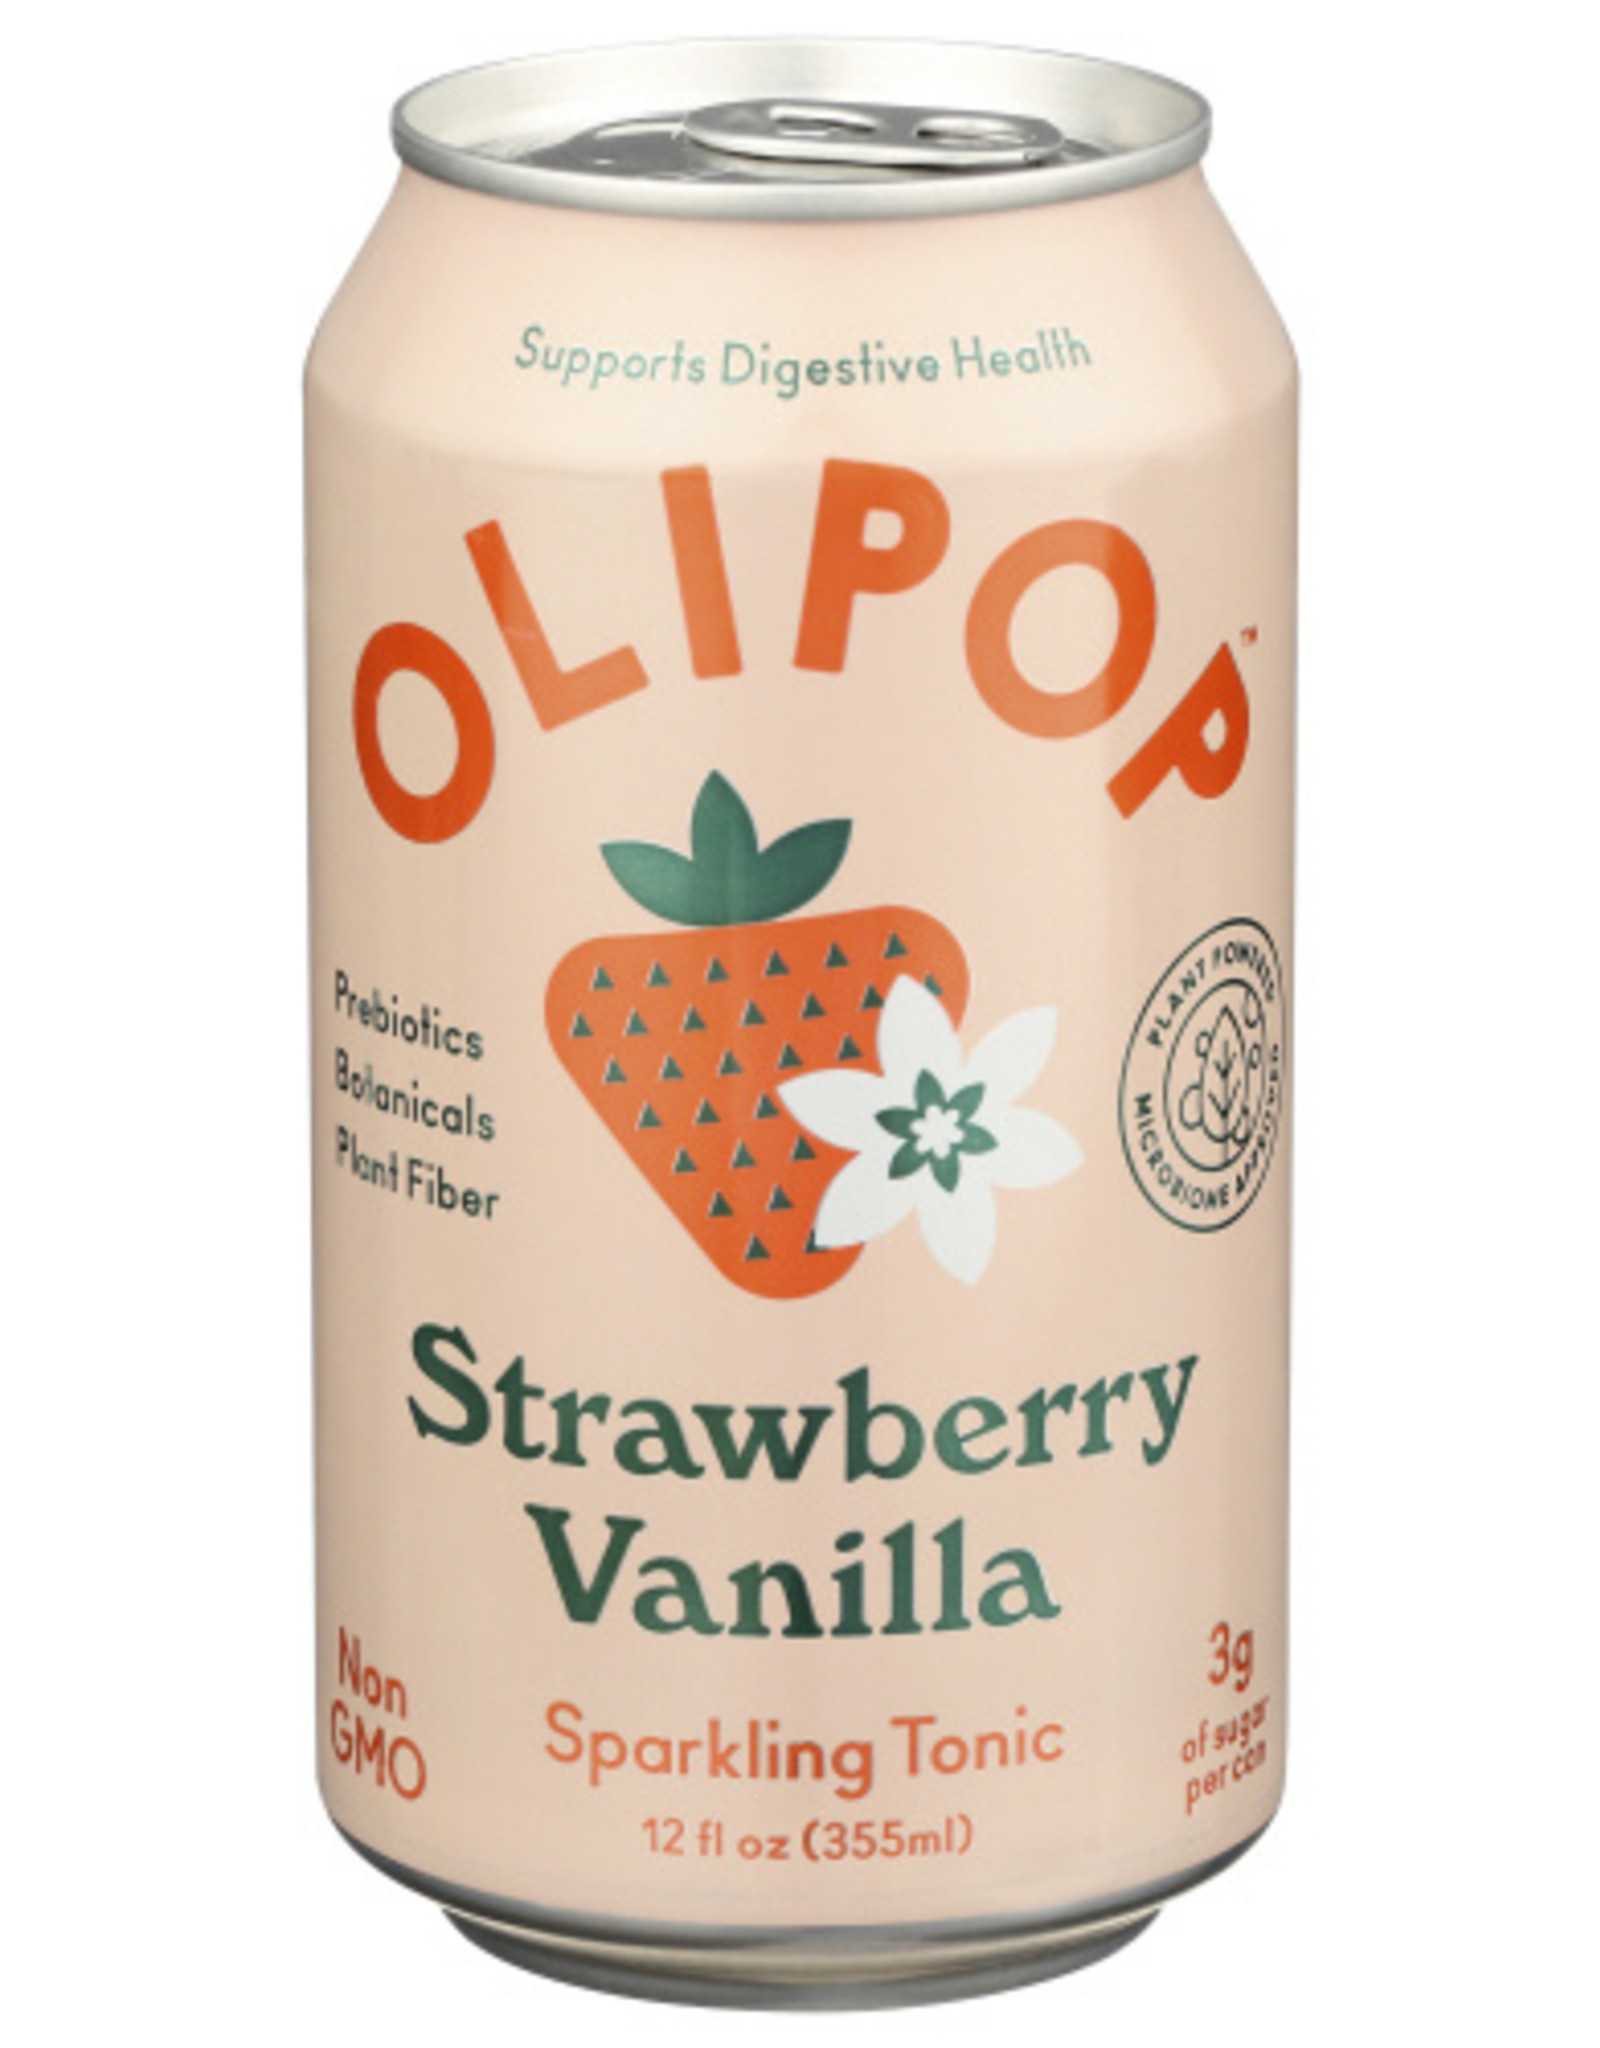 OLIPOP Olipop Strawberry Vanilla Sparkling Tonic